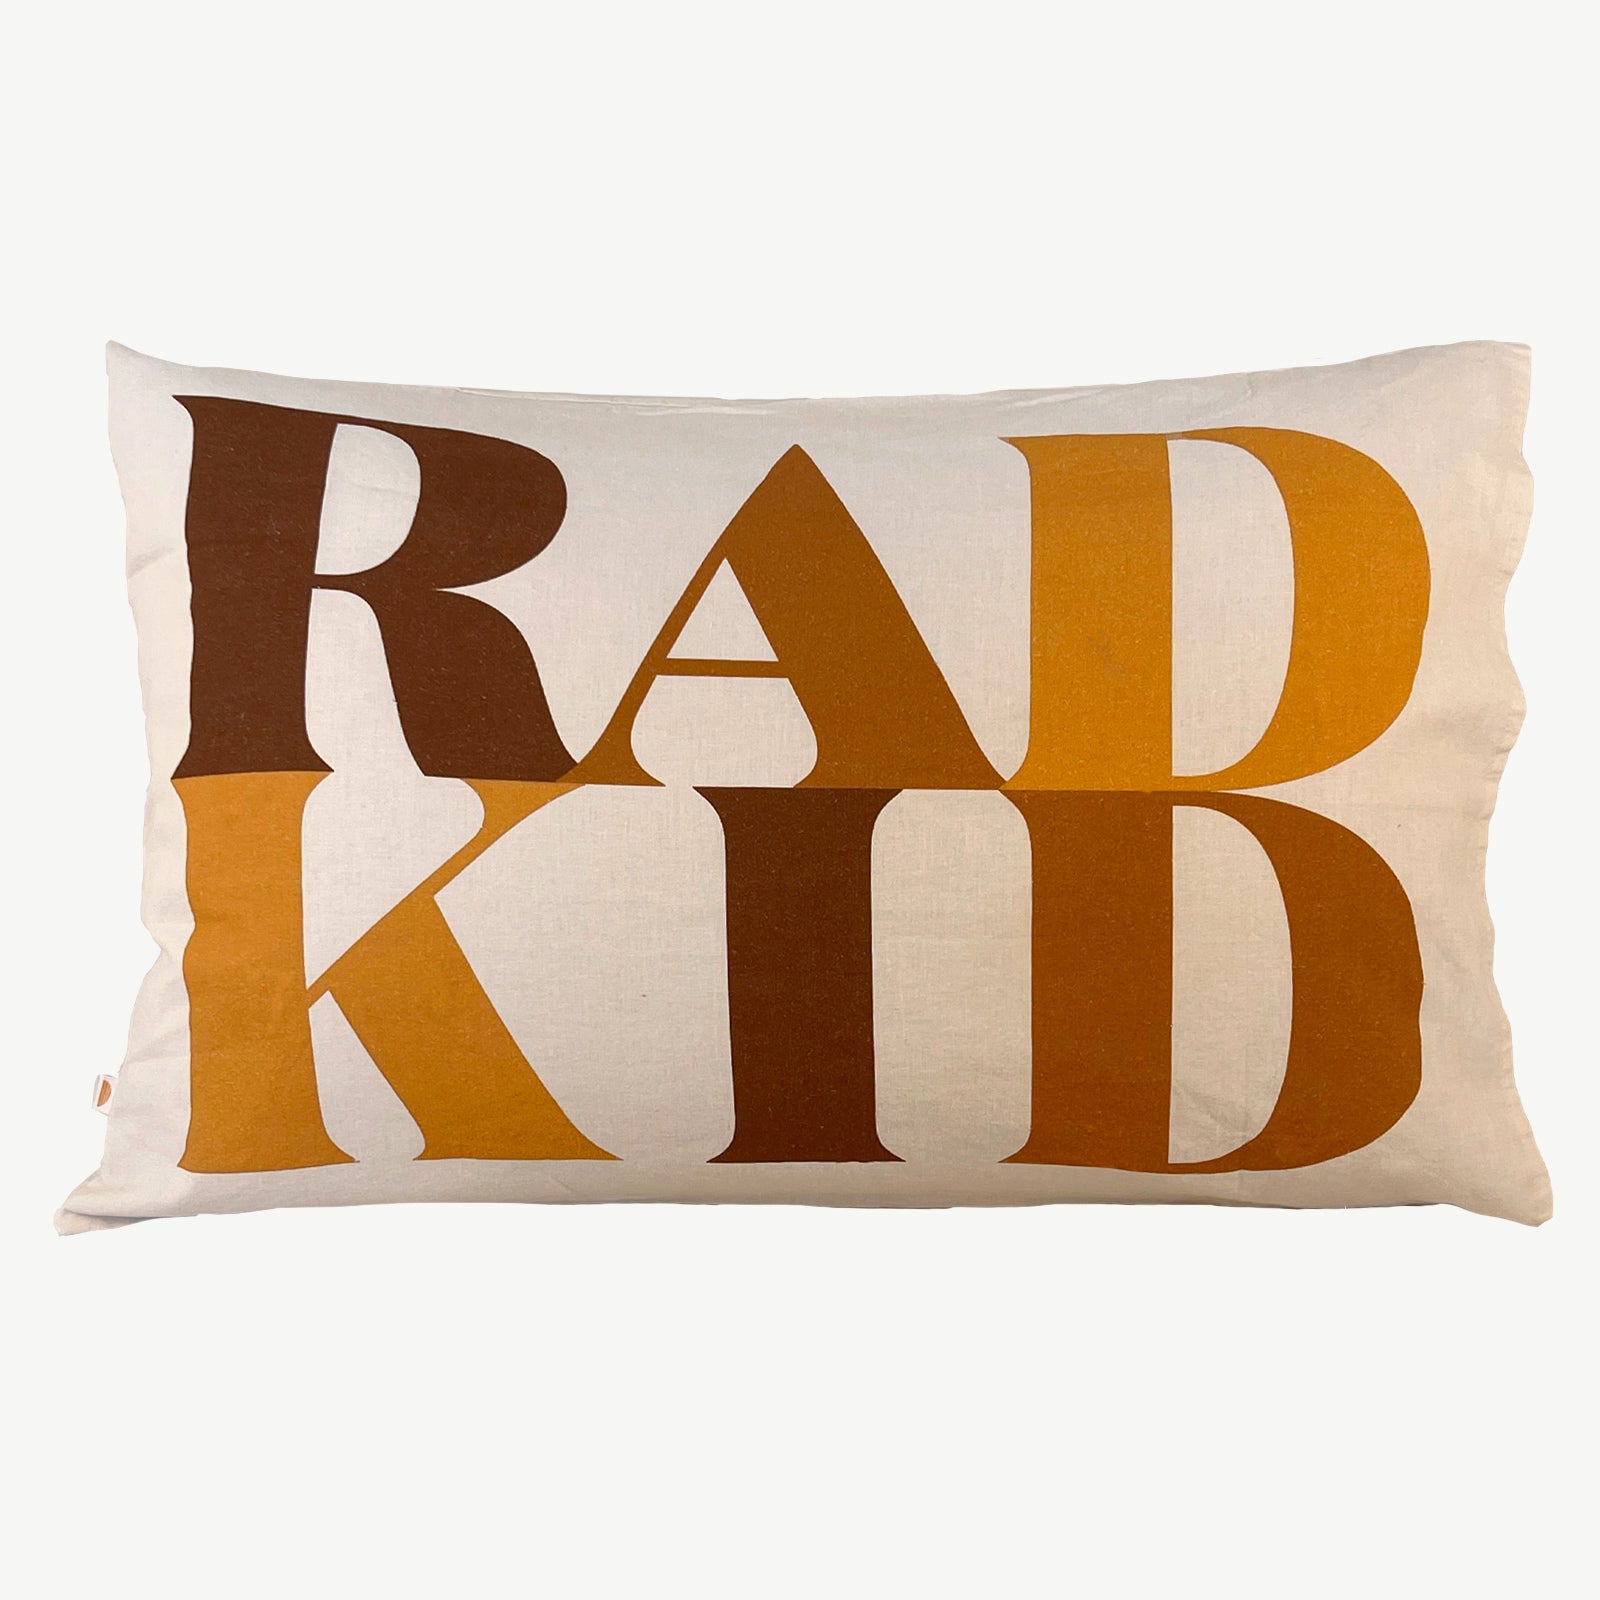 Rad Kid Standard Pillowcase